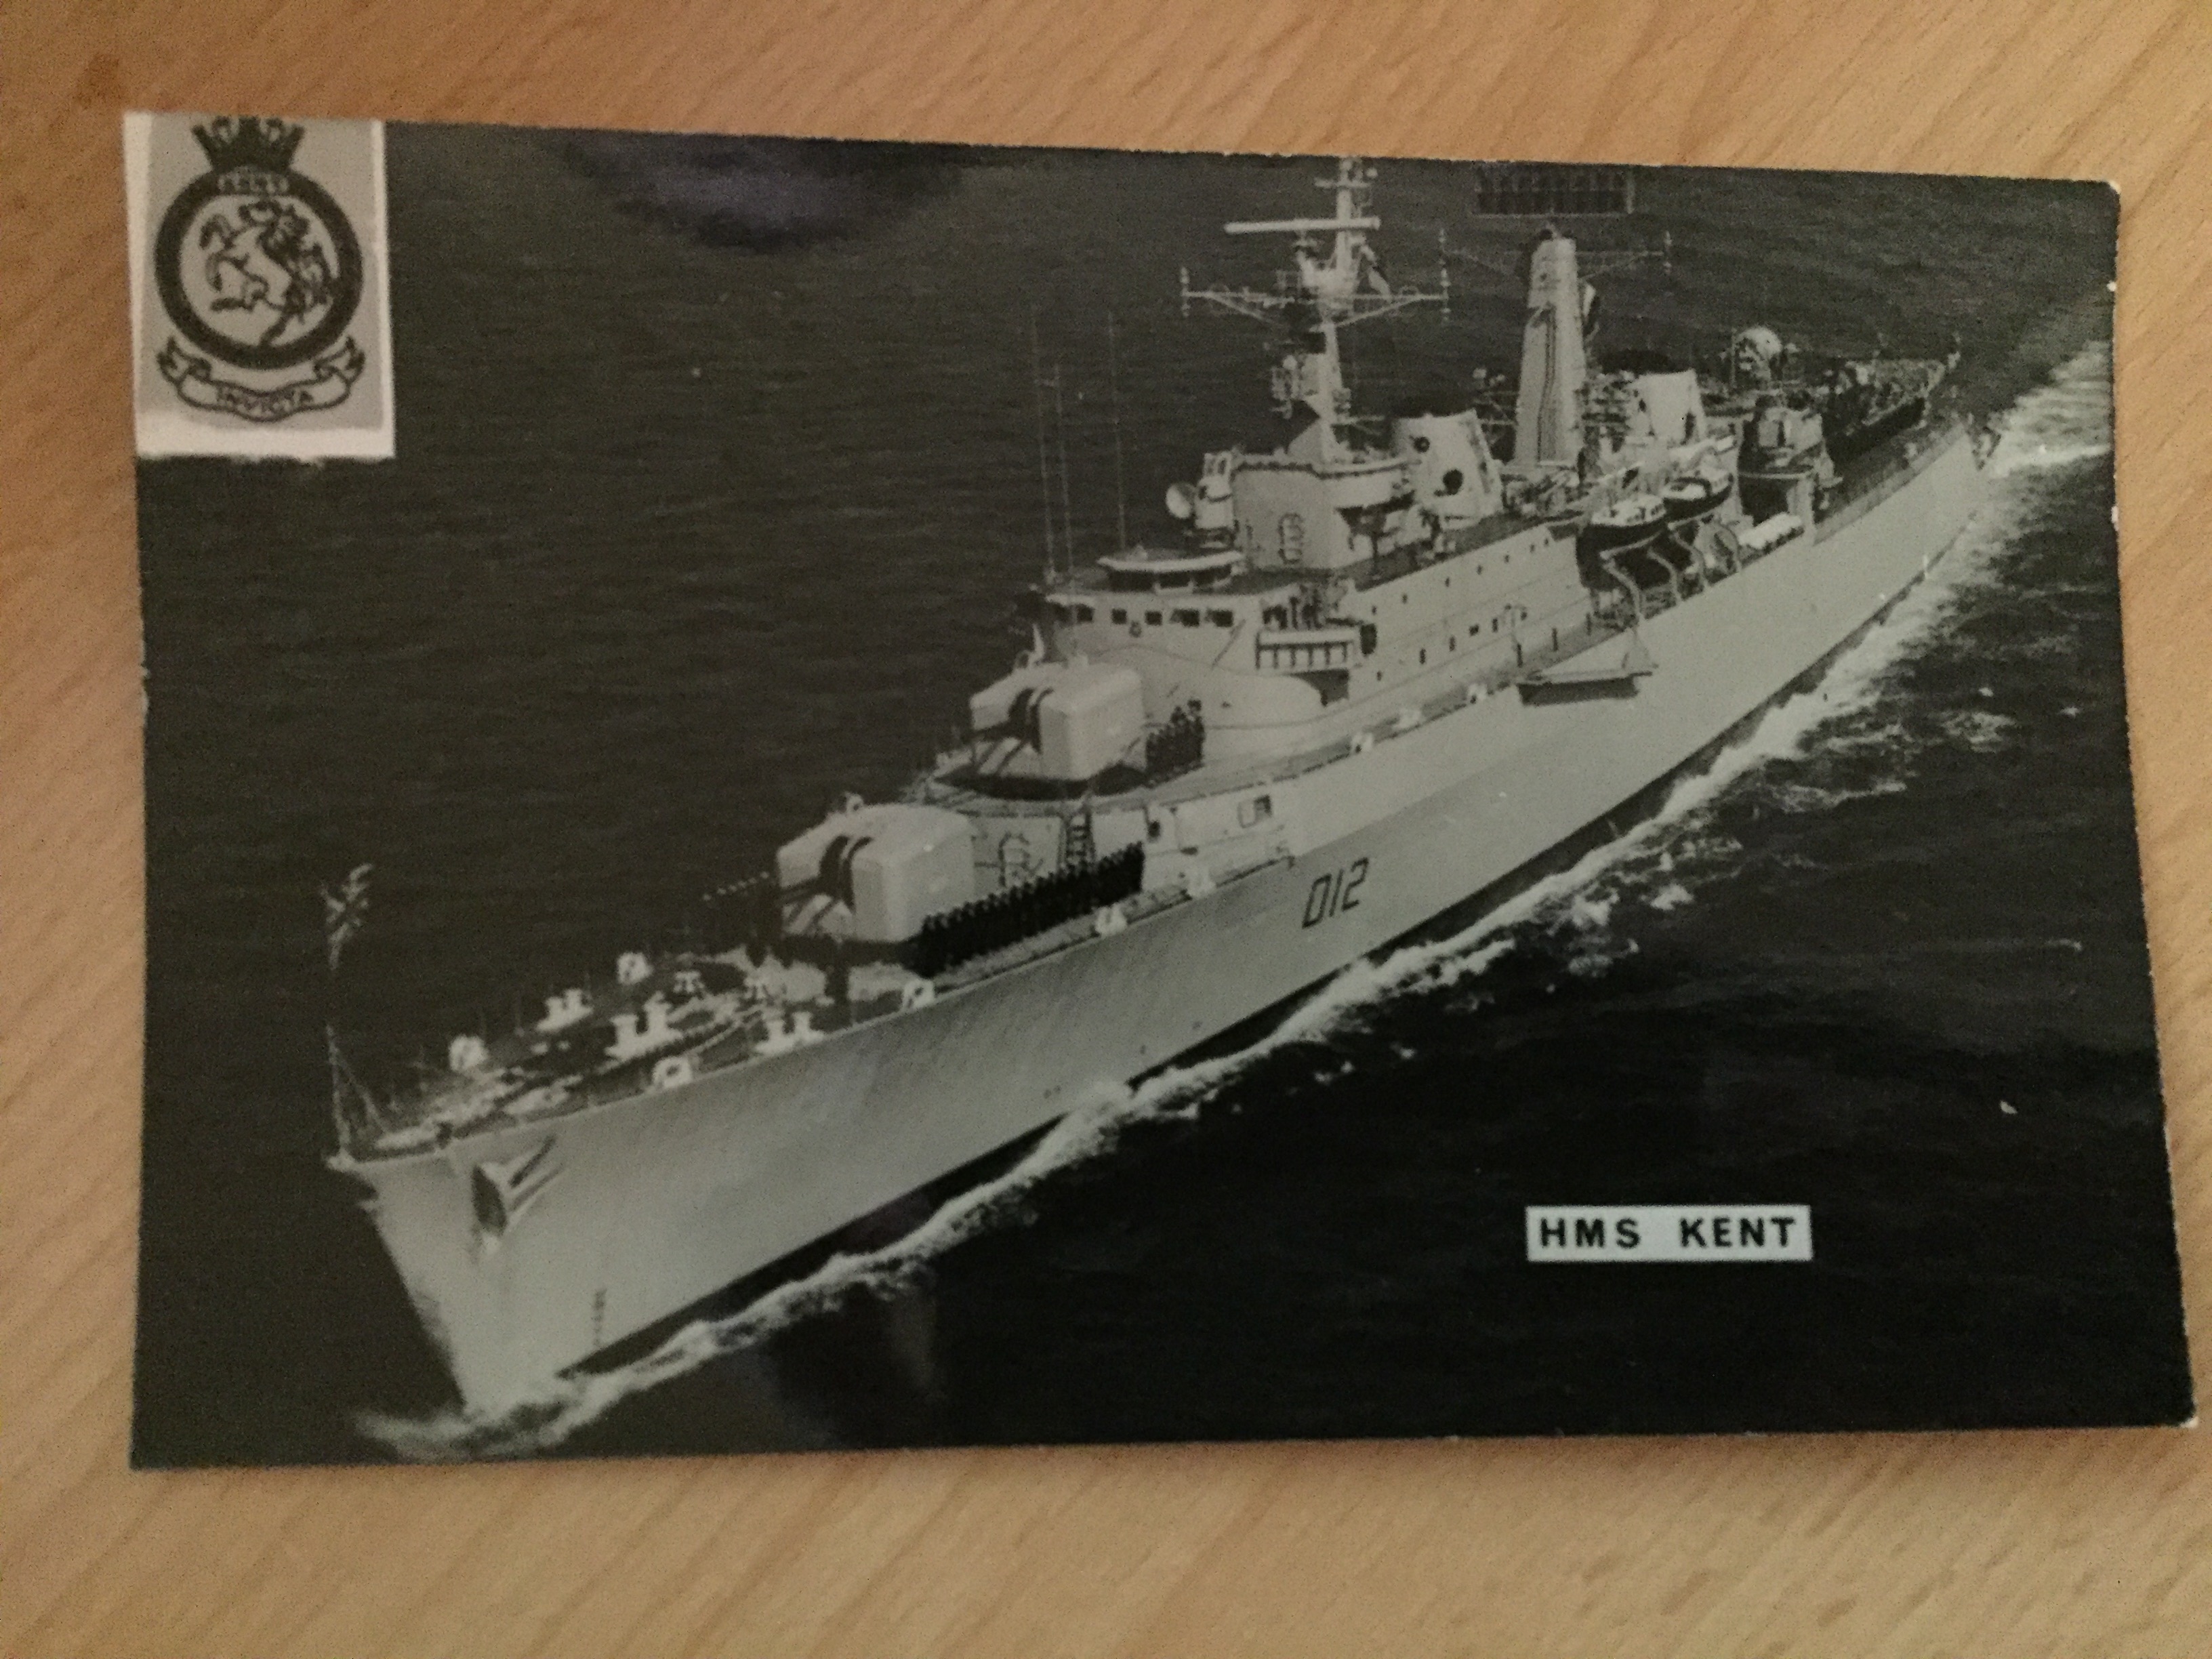 POSTCARD SIZE PHOTO OF THE ROYAL NAVAL VESSEL THE HMS KENT